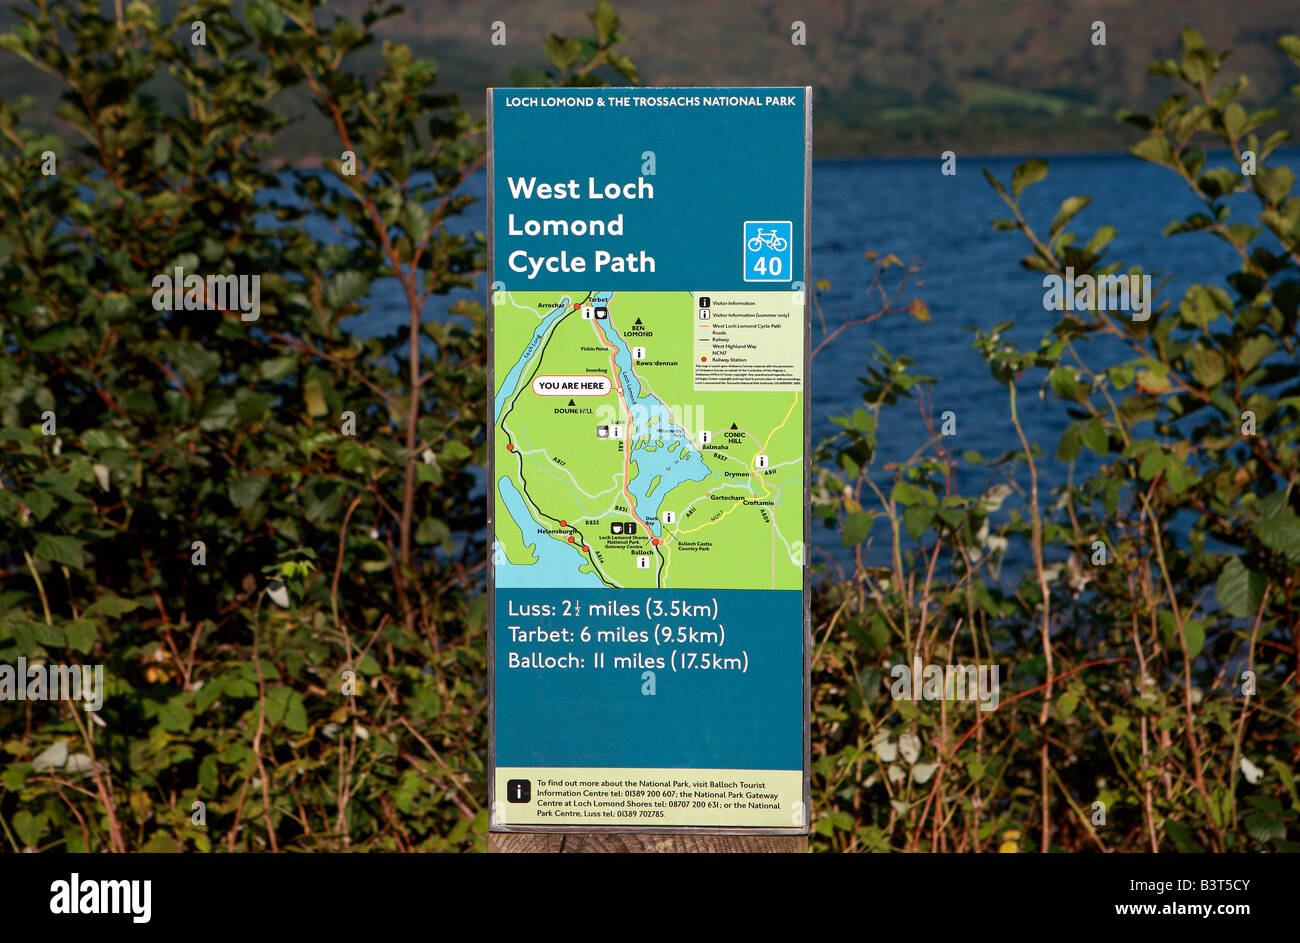 Loch Lomond cycle path sign Stock Photo